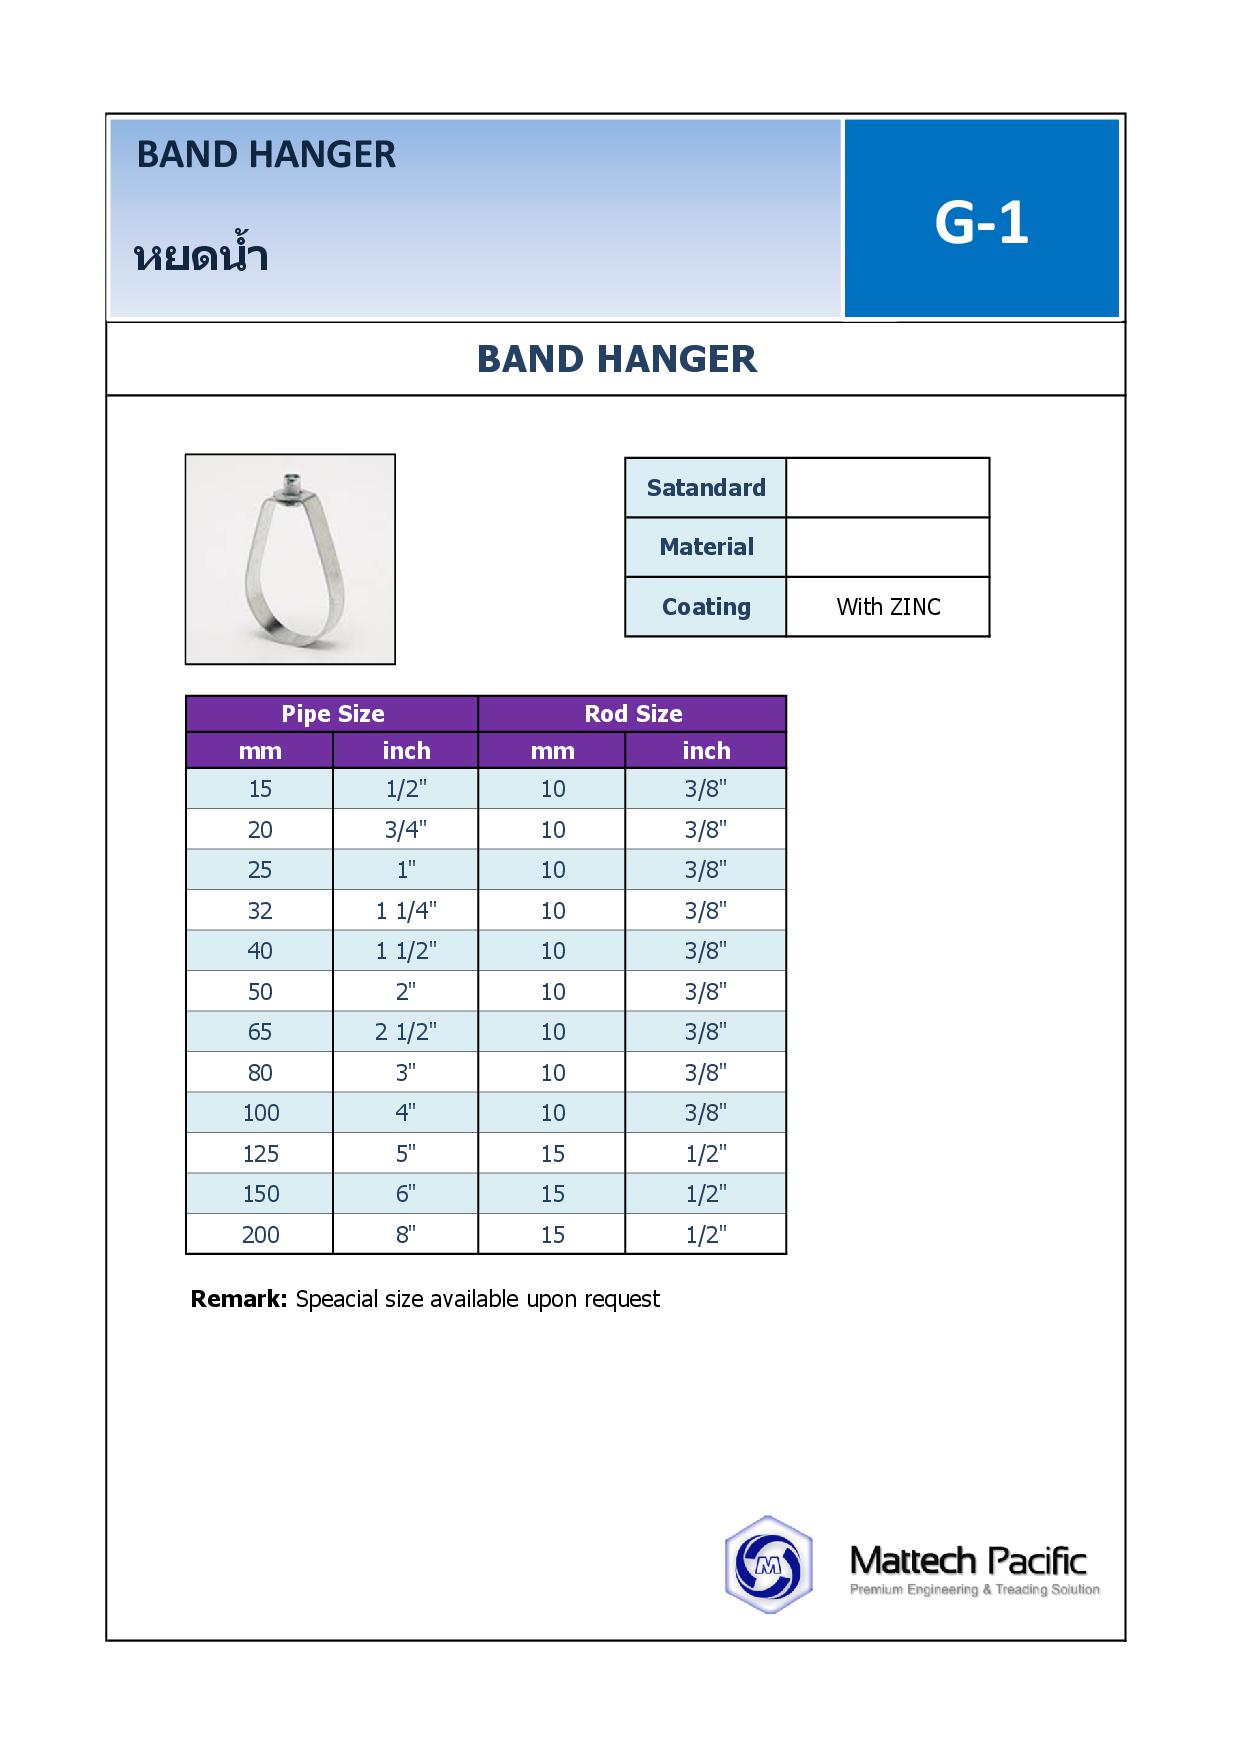 Band hanger